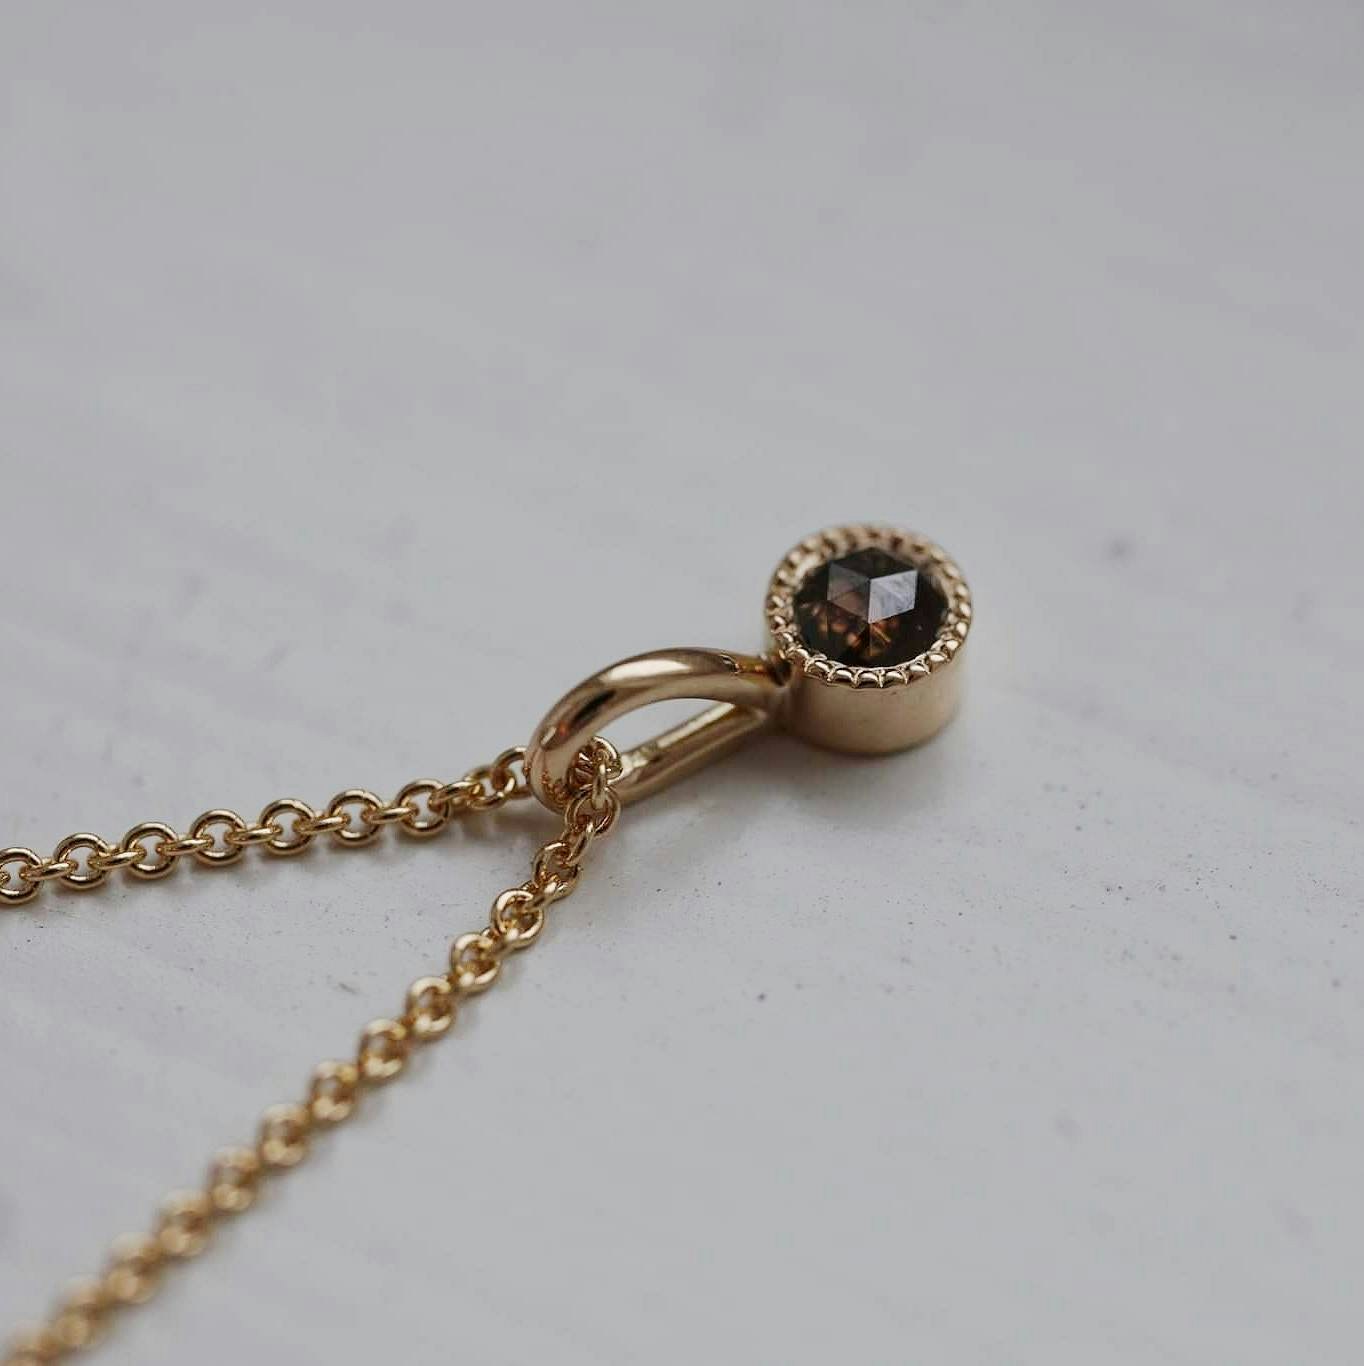 "Twinkle" hänge i guld med en rosenslipad brun diamant